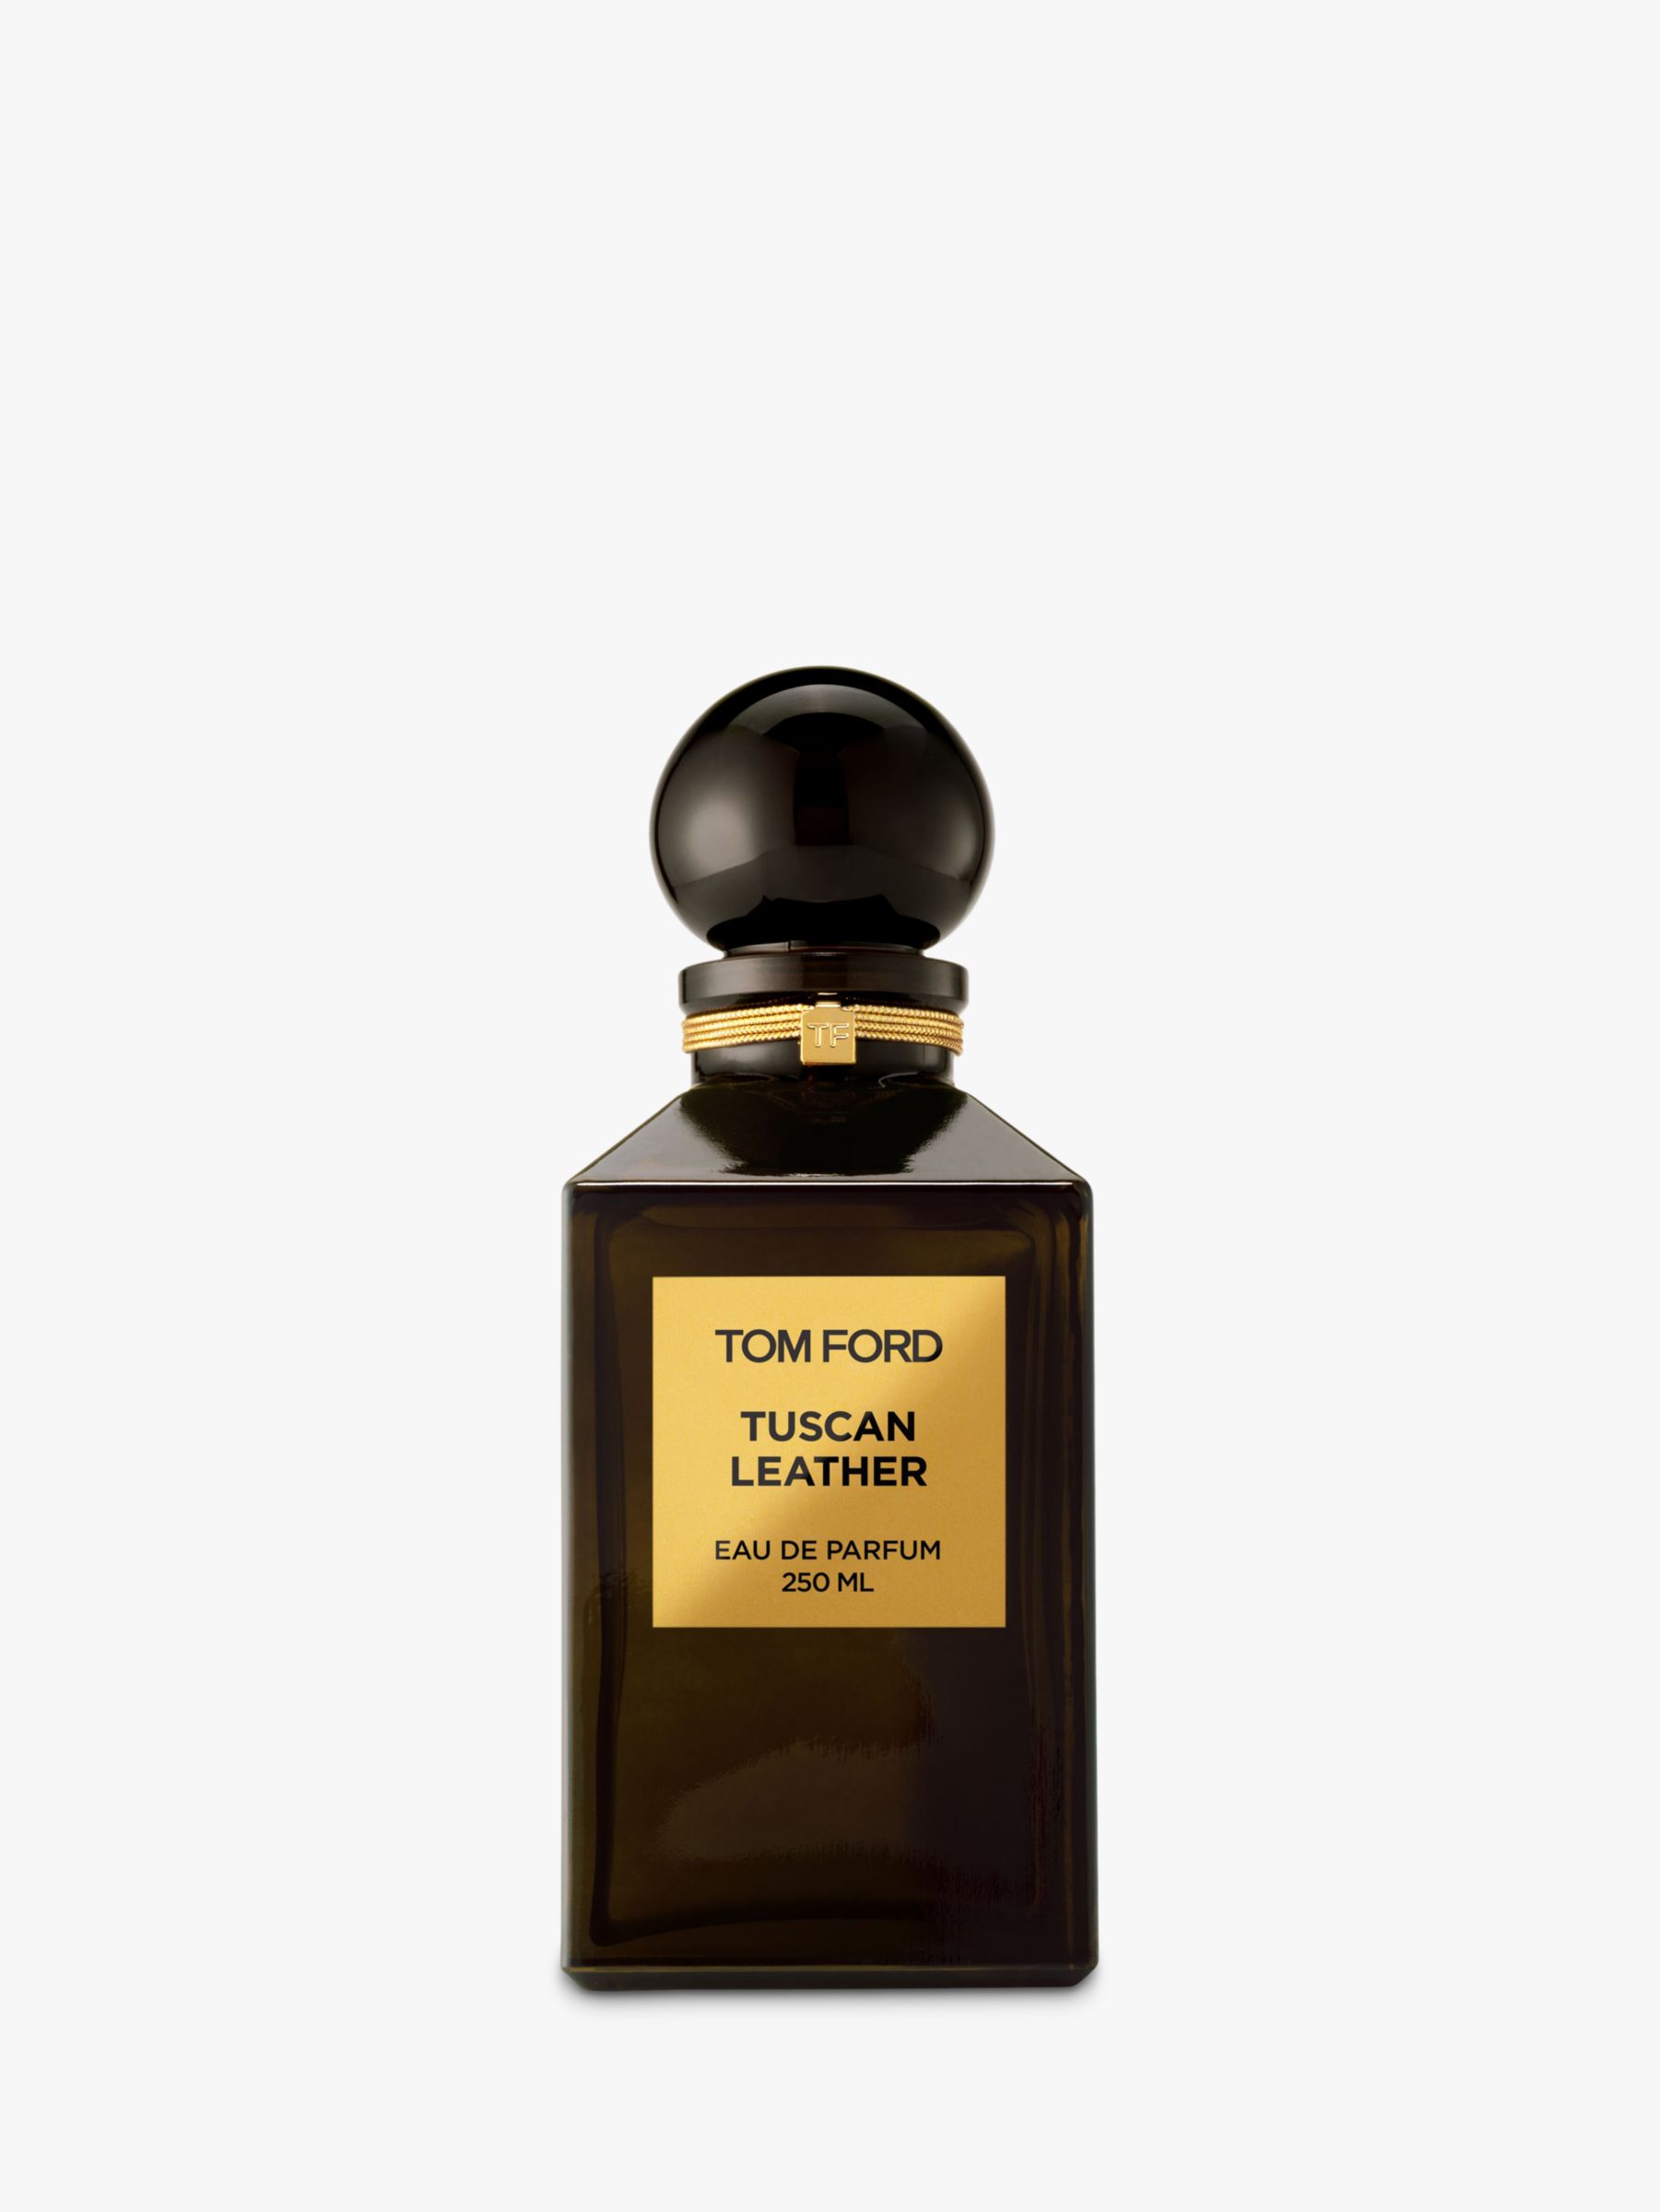 TOM FORD Private Blend Tuscan Leather Eau de Parfum, 250ml